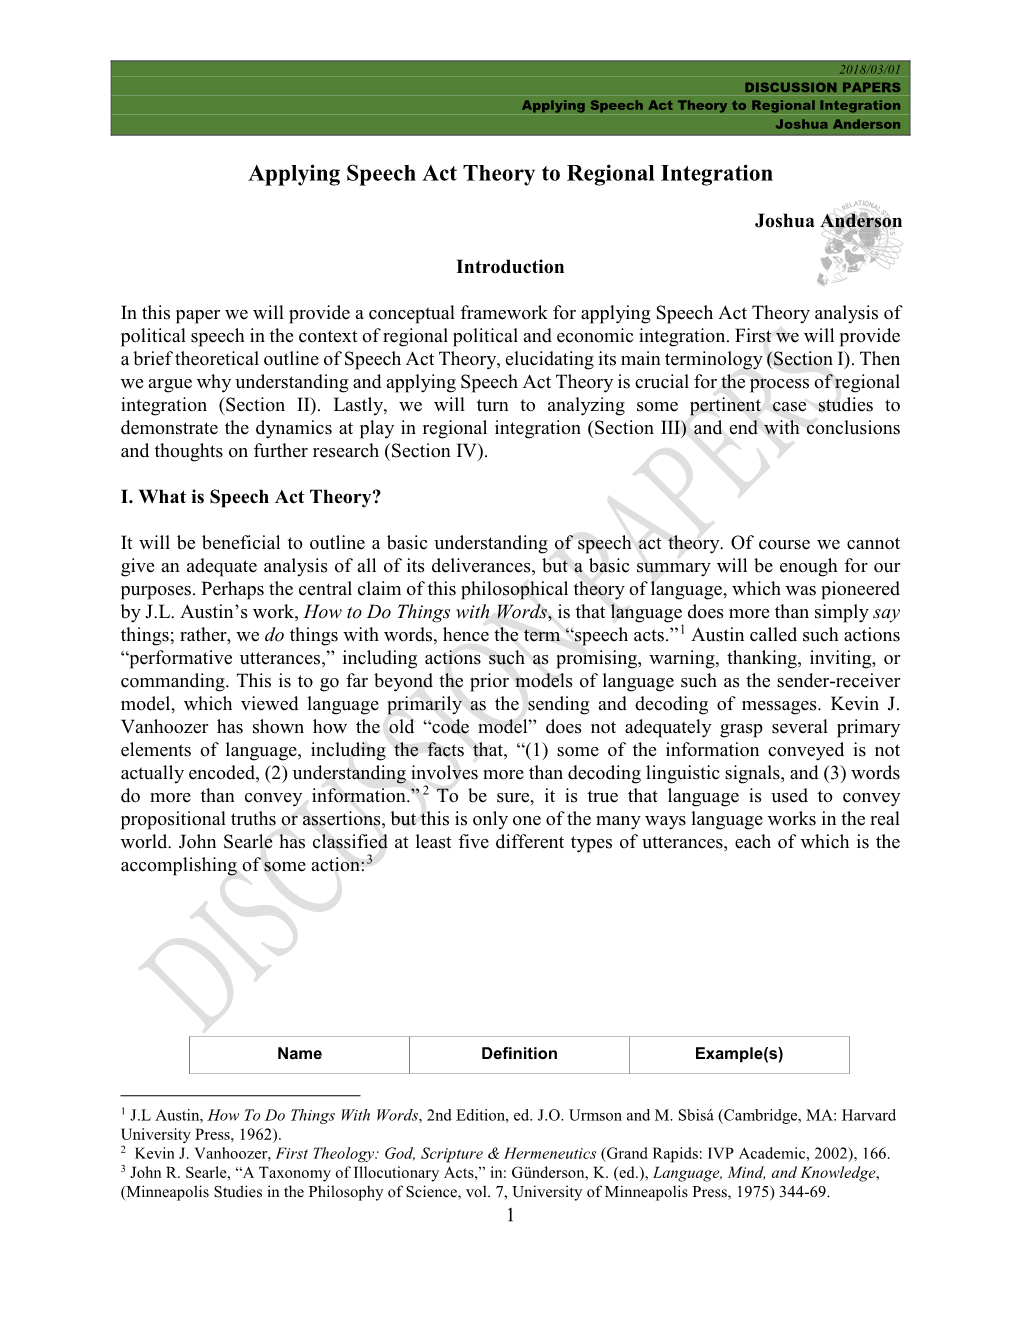 Applying Speech Act Theory to Regional Integration Joshua Anderson